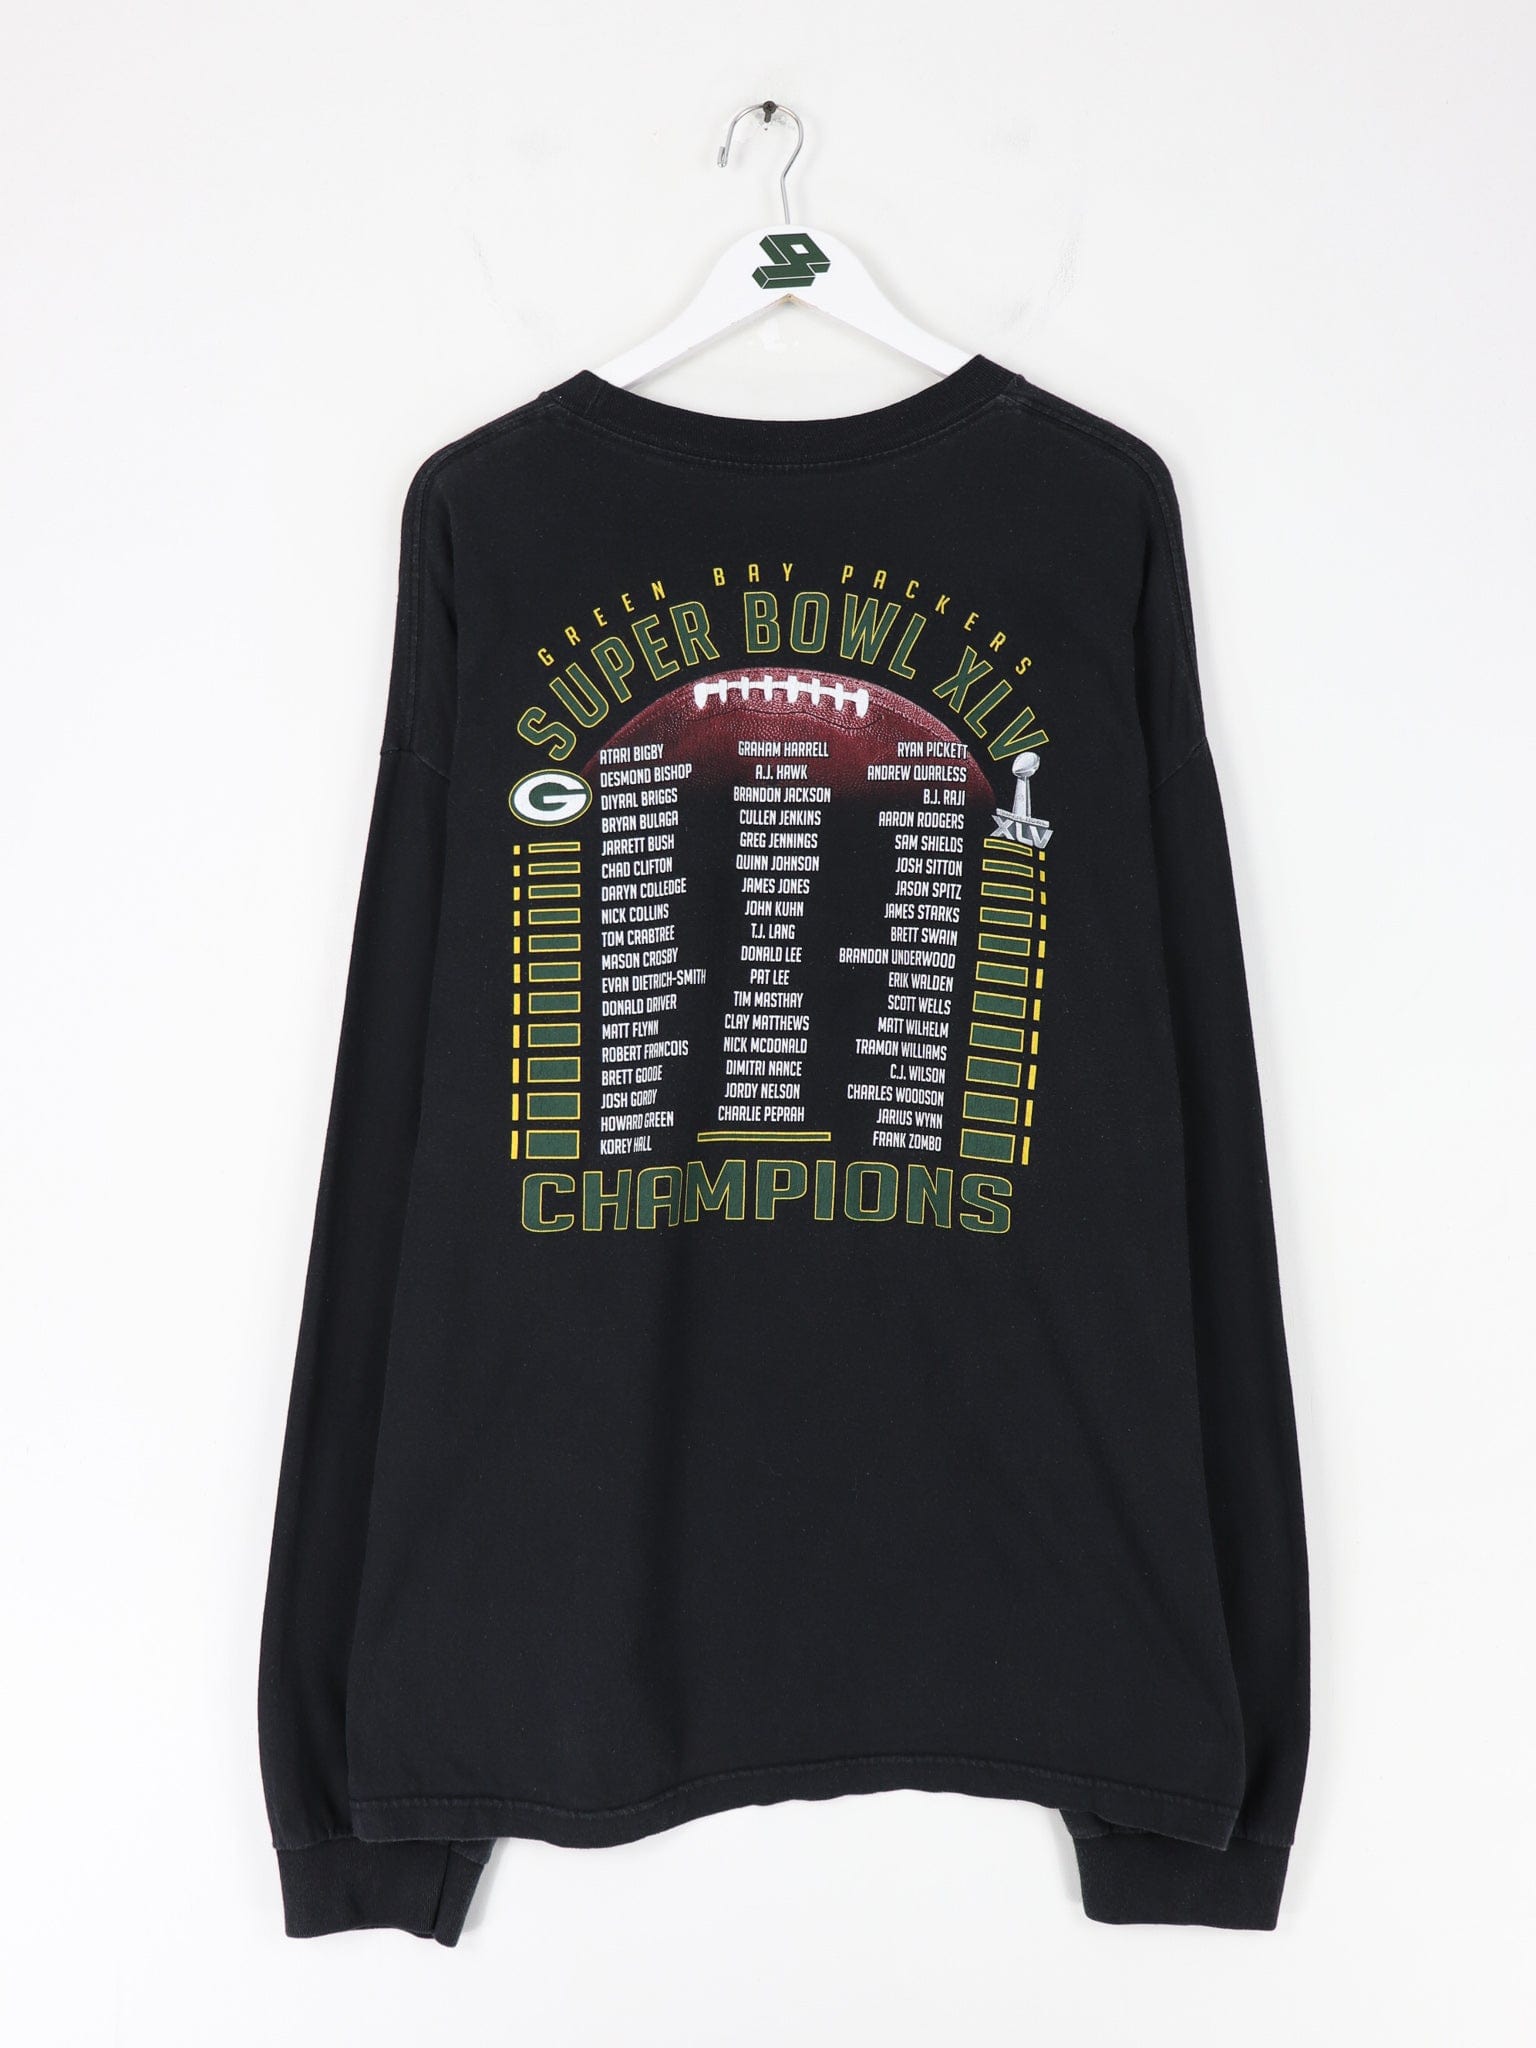 Green Bay Packers Longsleeve Shirt Mens 2XL Black Super Bowl XLV